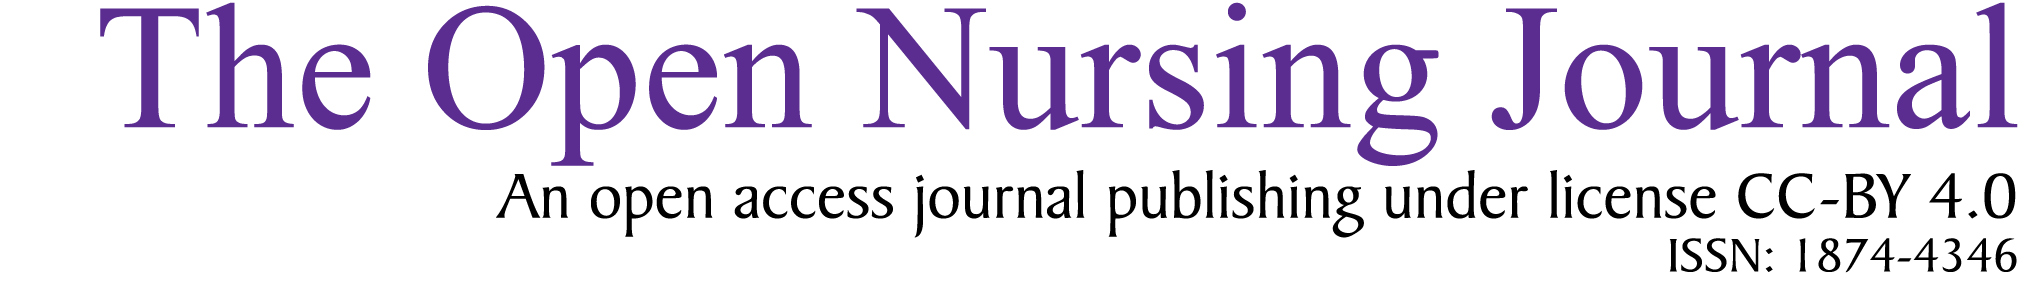 Open Nursing Journal